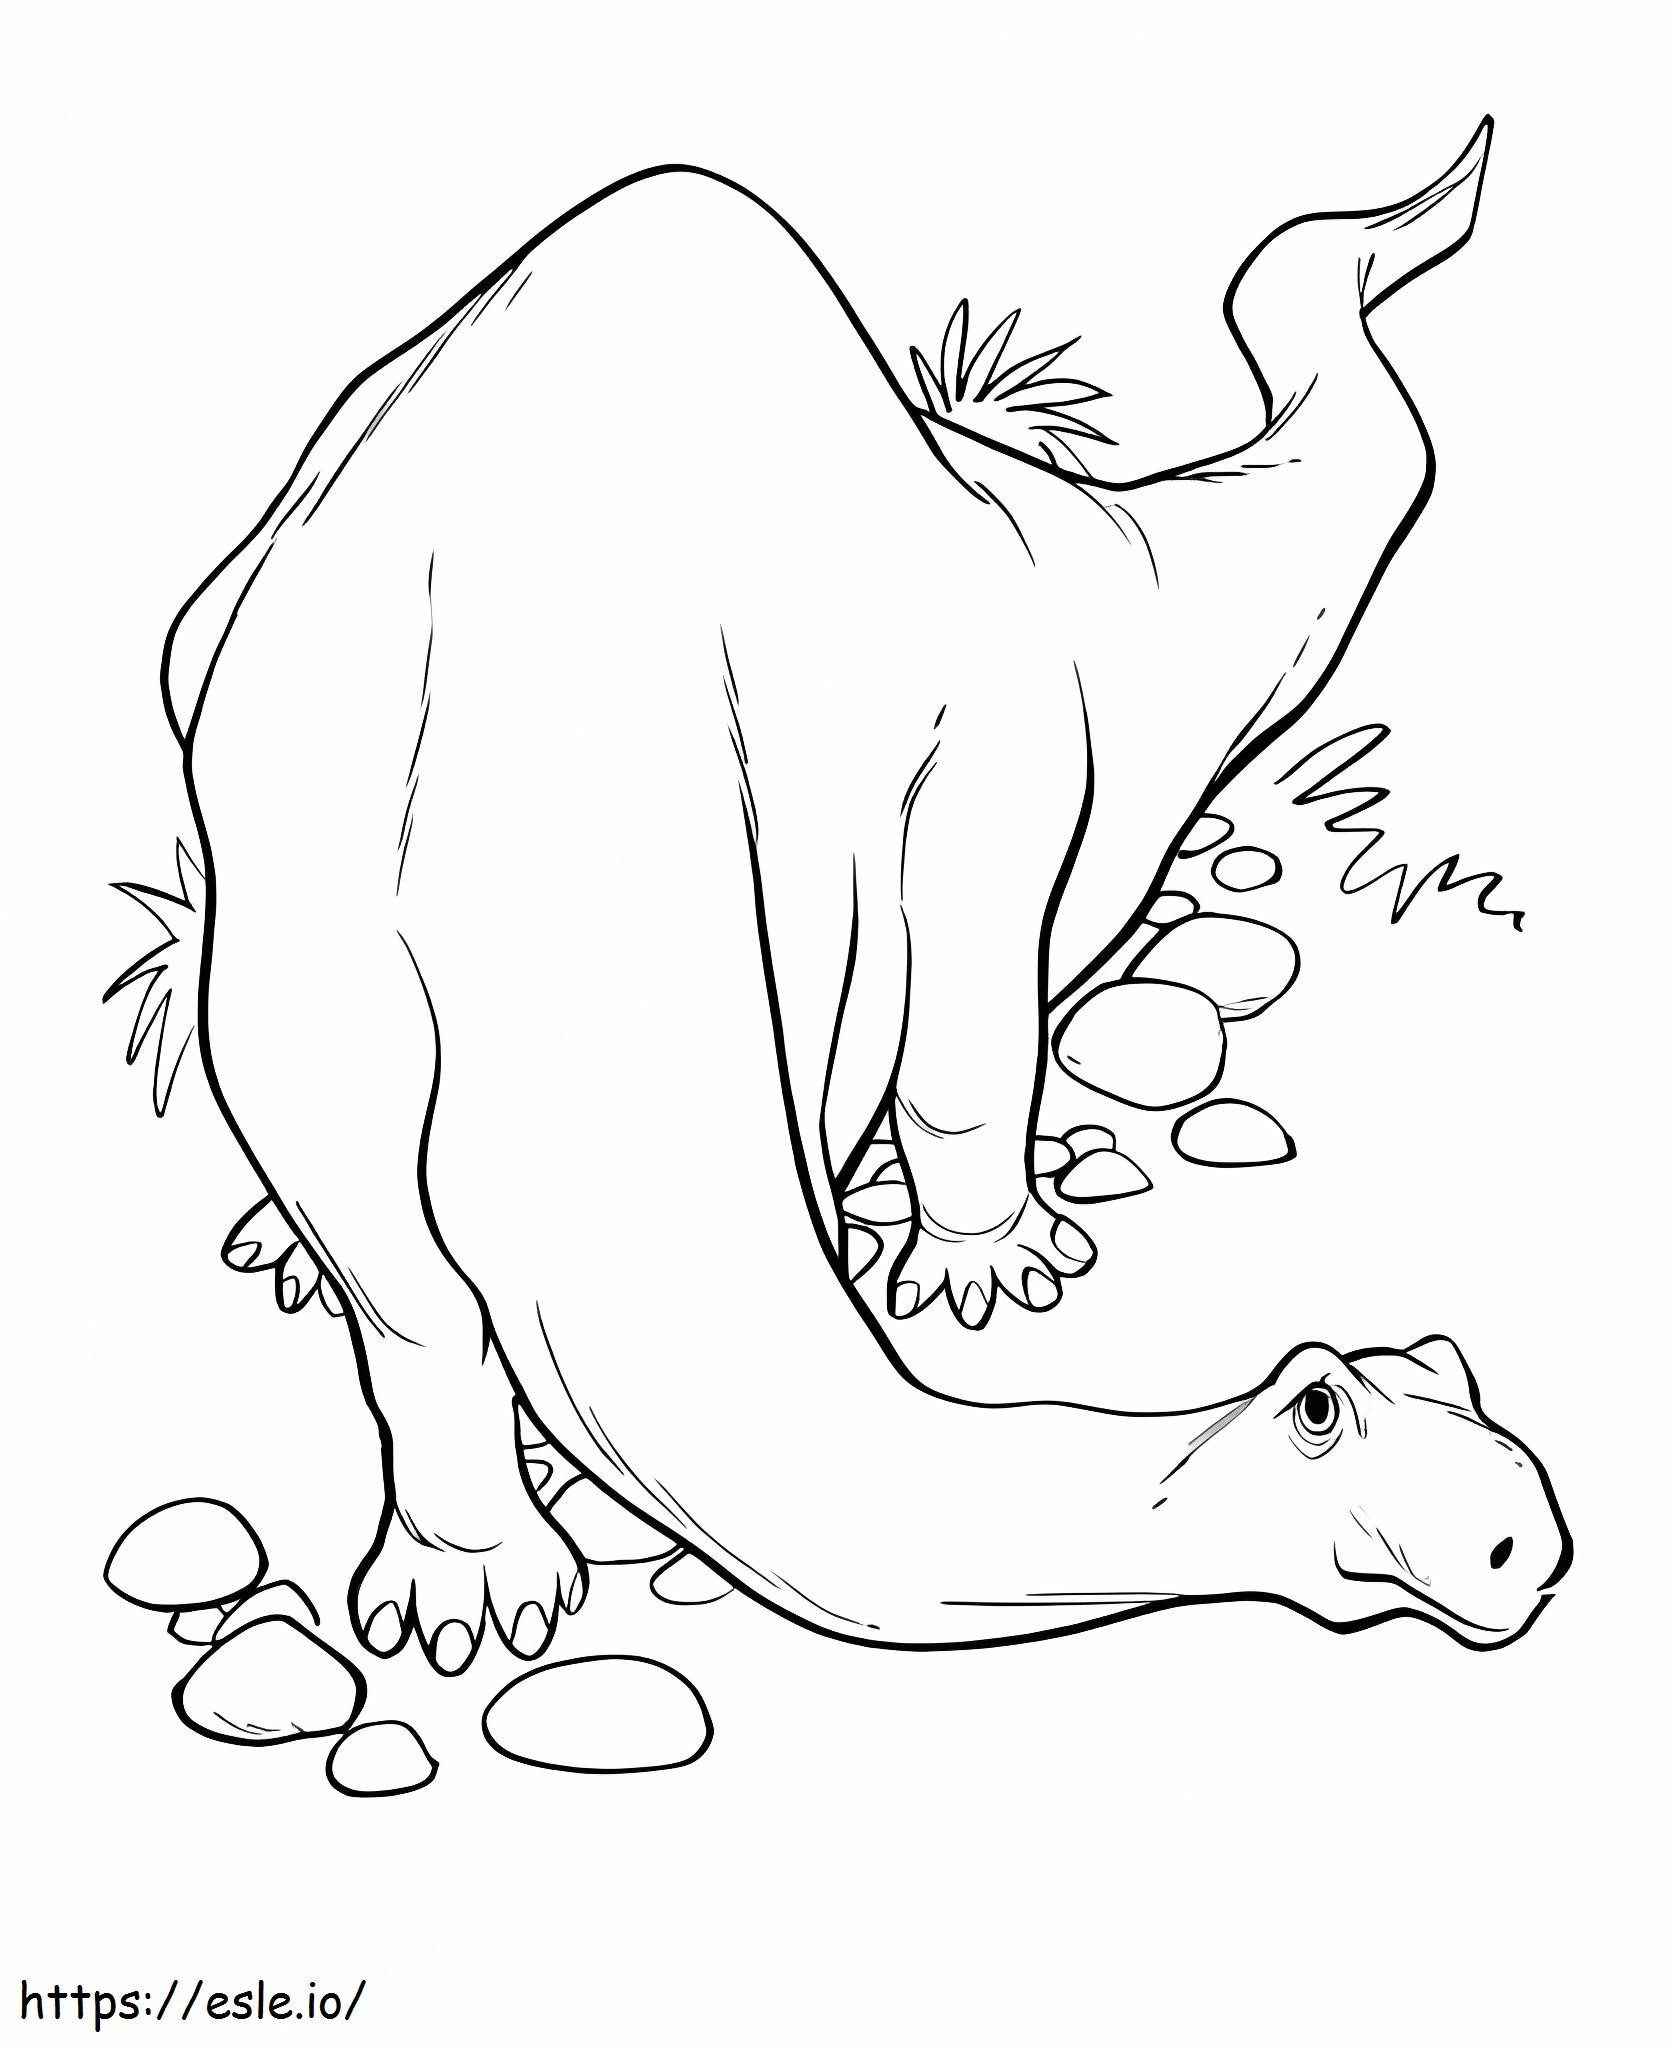 Walking Brontosaurus coloring page